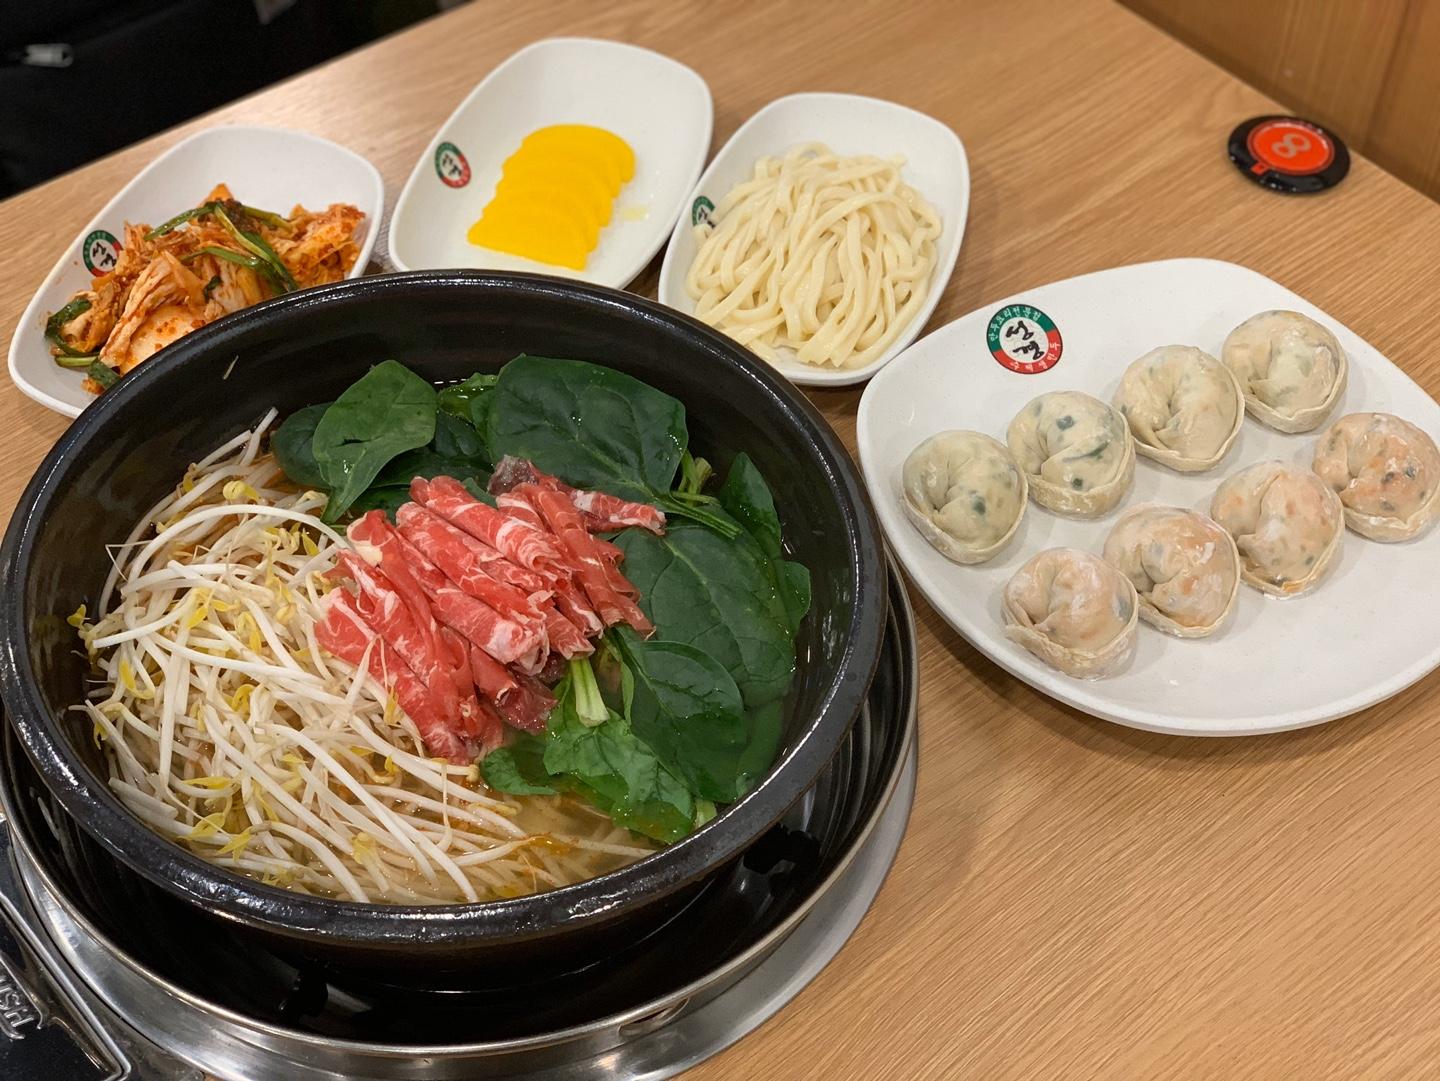 Sungkyung Dumplings | Jongno Food Recommendation